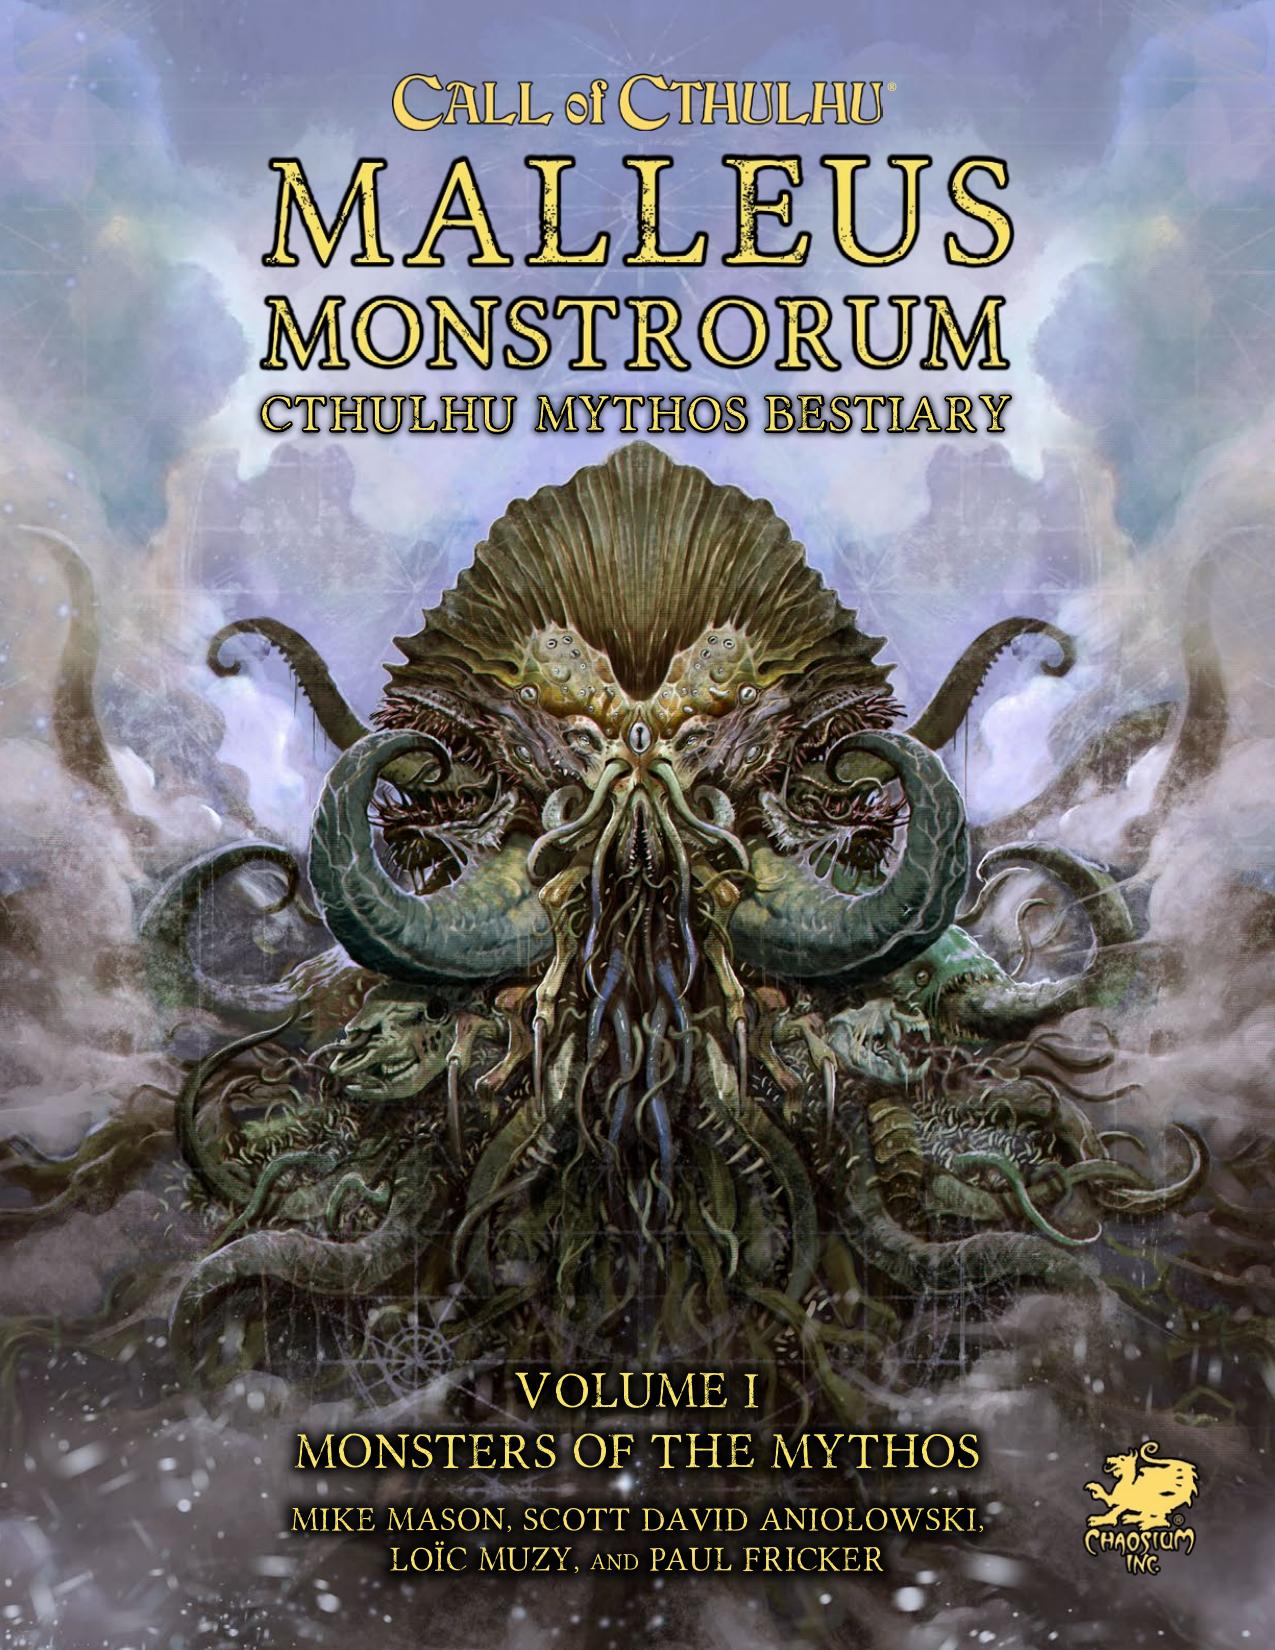 Call of Cthulhu - Malleus Monstrorum Volume I